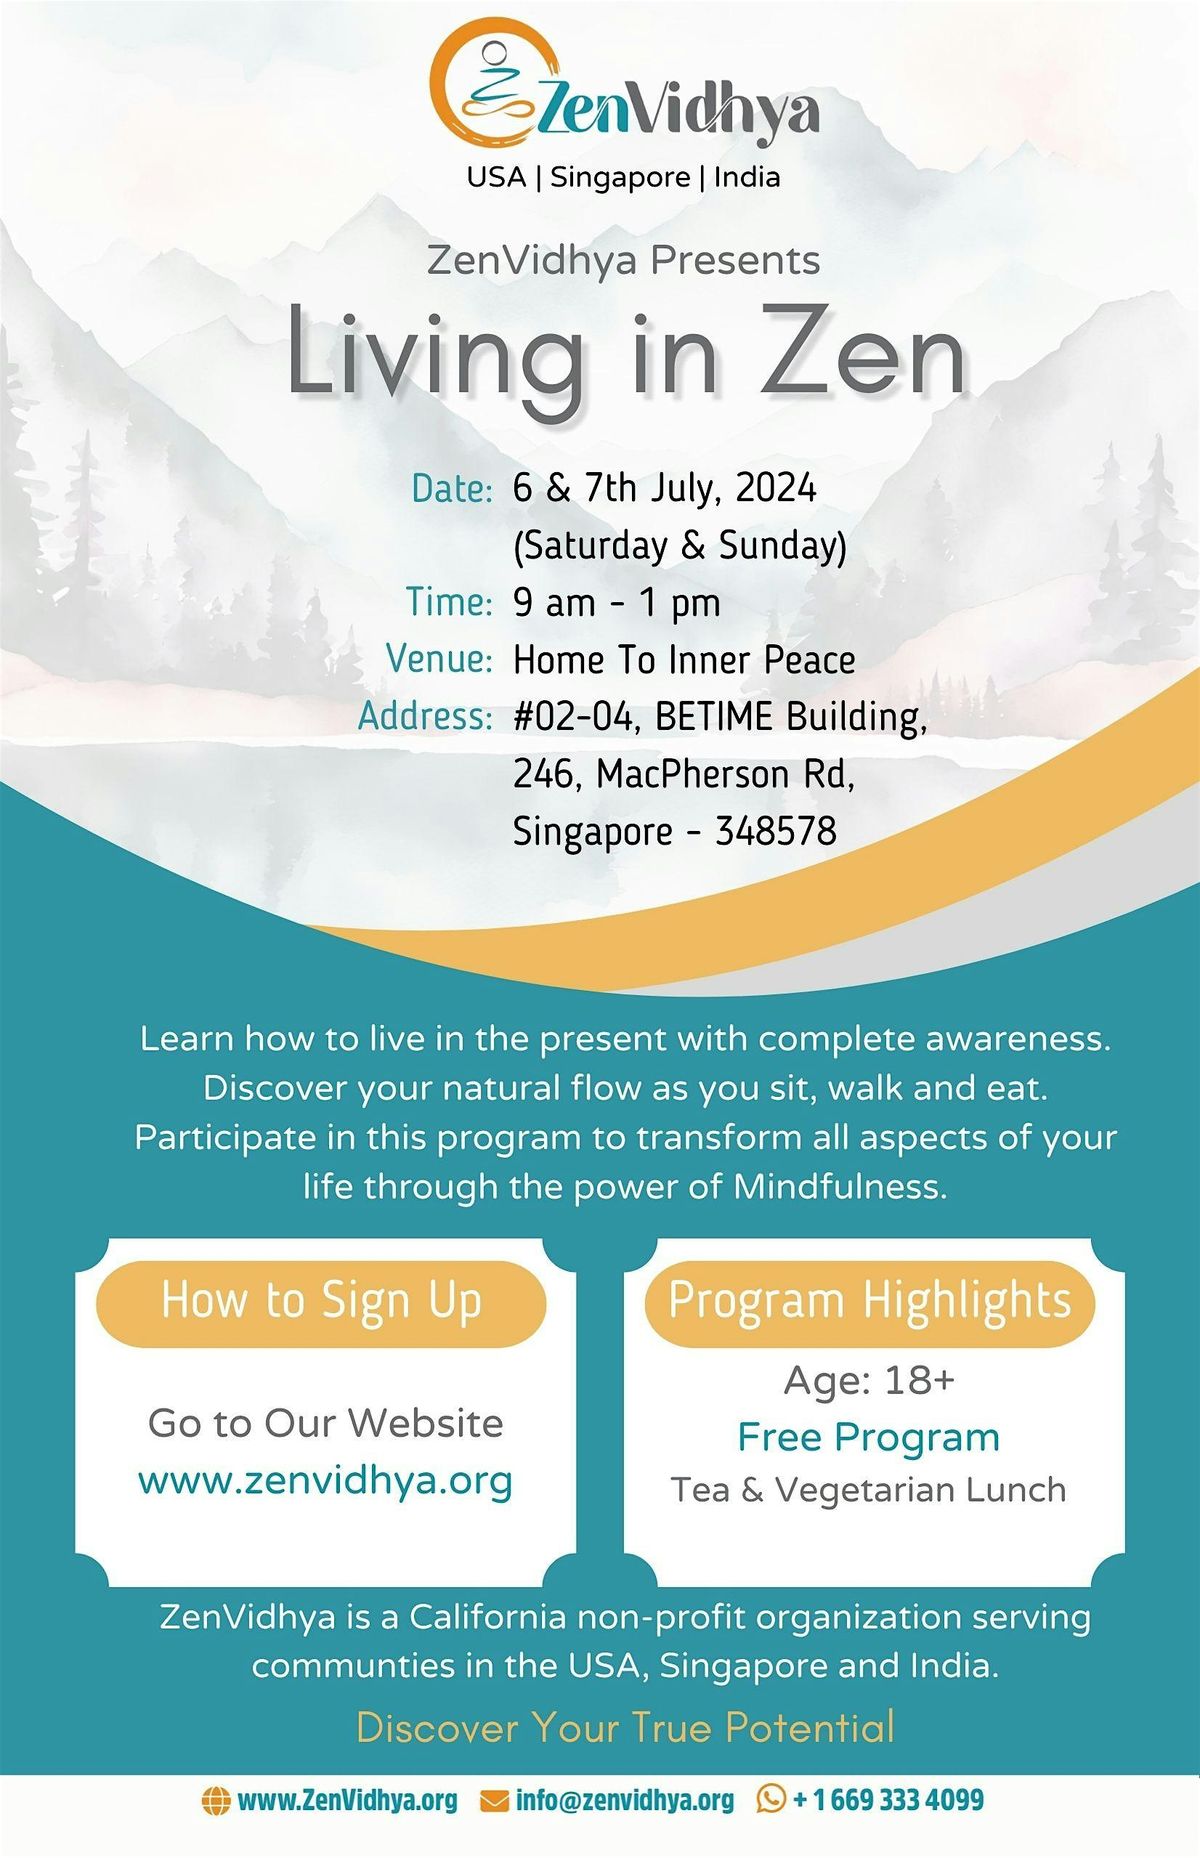 LIVING IN ZEN - 2 Days Mindfulness Retreat Program In Singapore